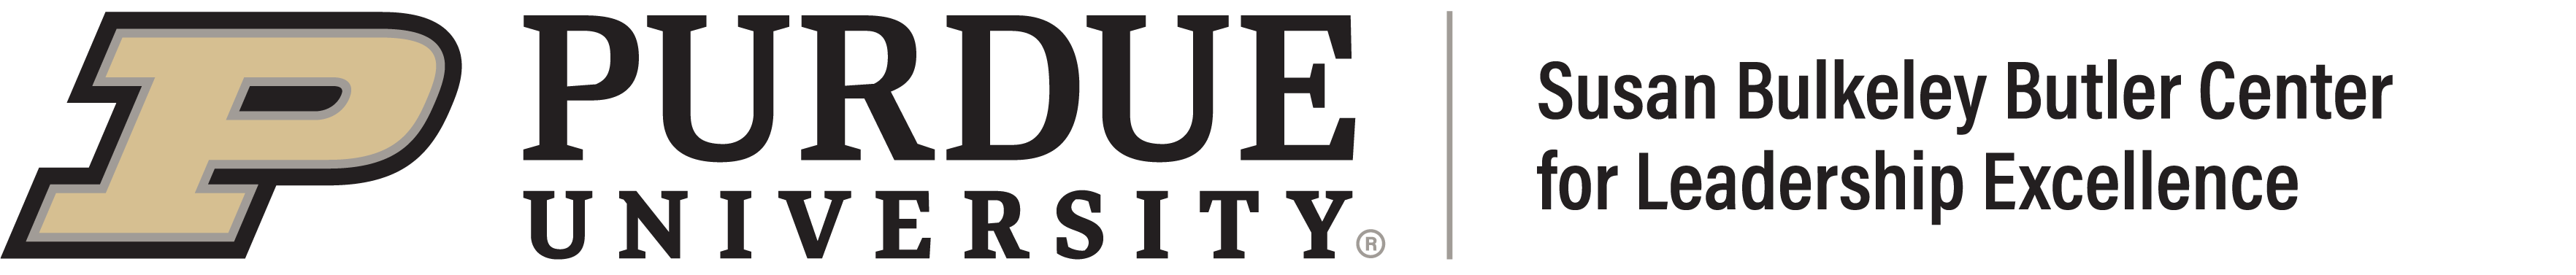 Purdue University | Susan Bulkeley Butler Center for Leadership Excellence